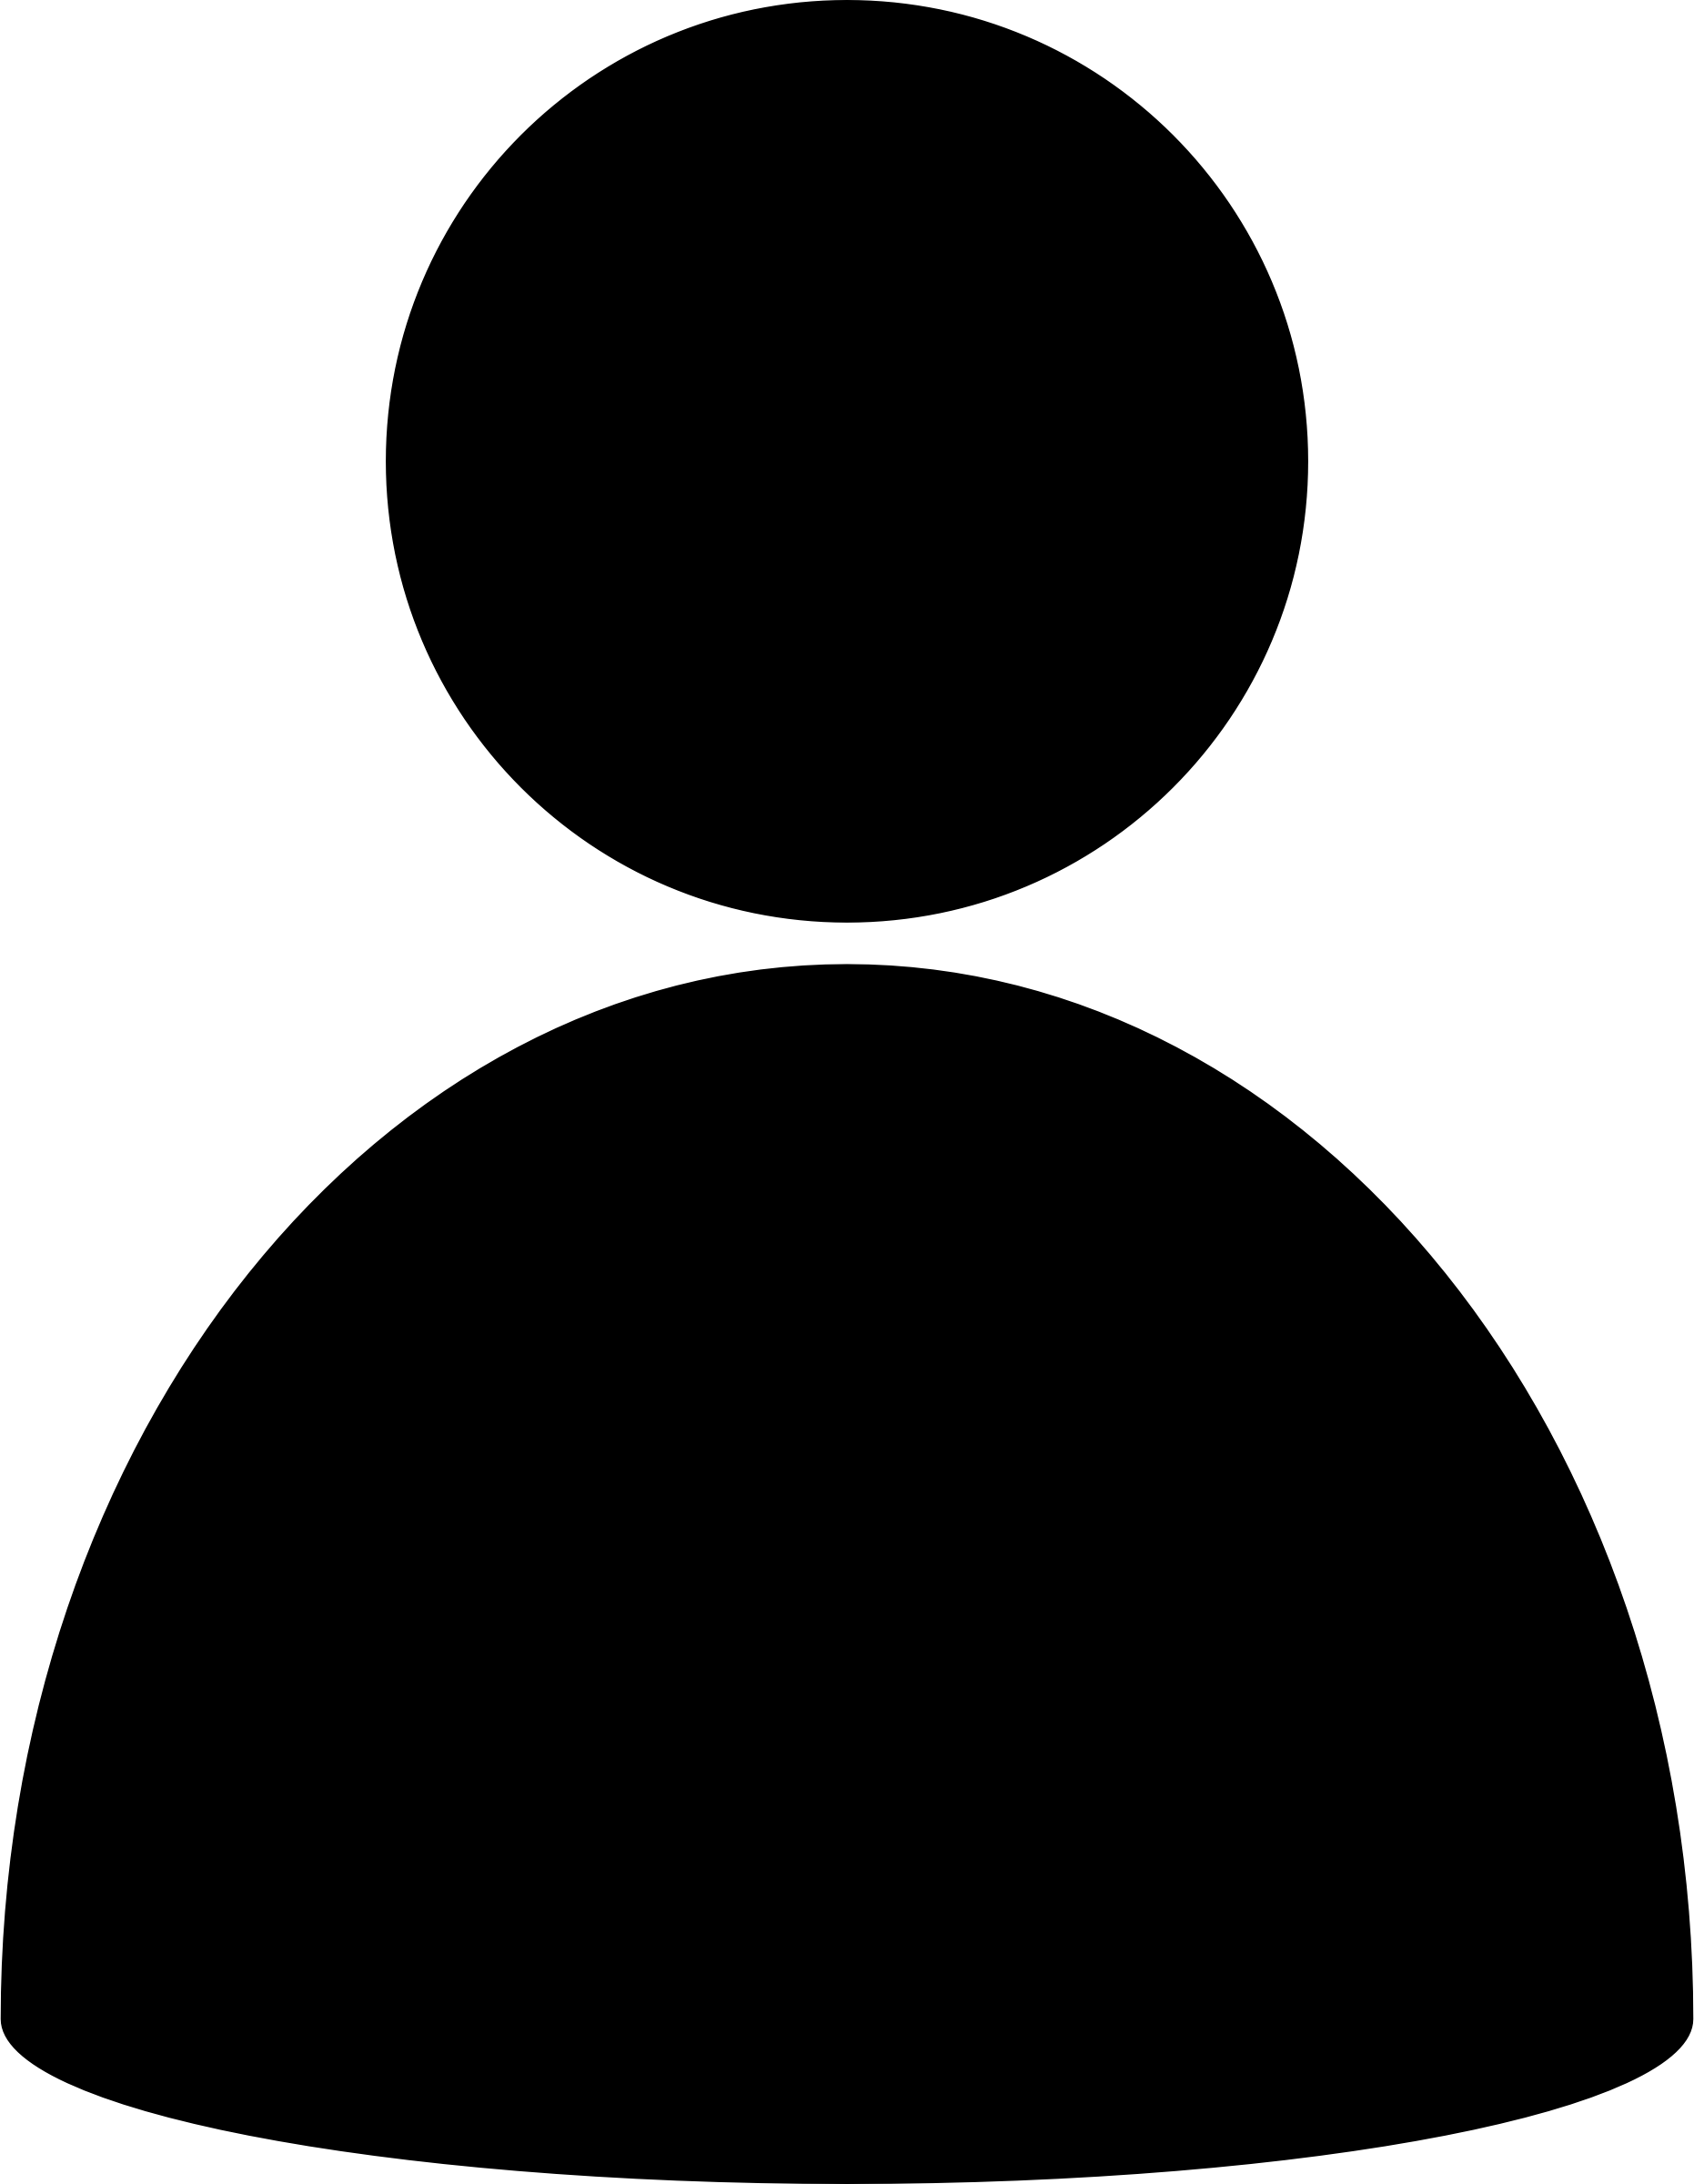 Black,Headgear,Circle,Black-and-white,Cap,Clip art,Oval